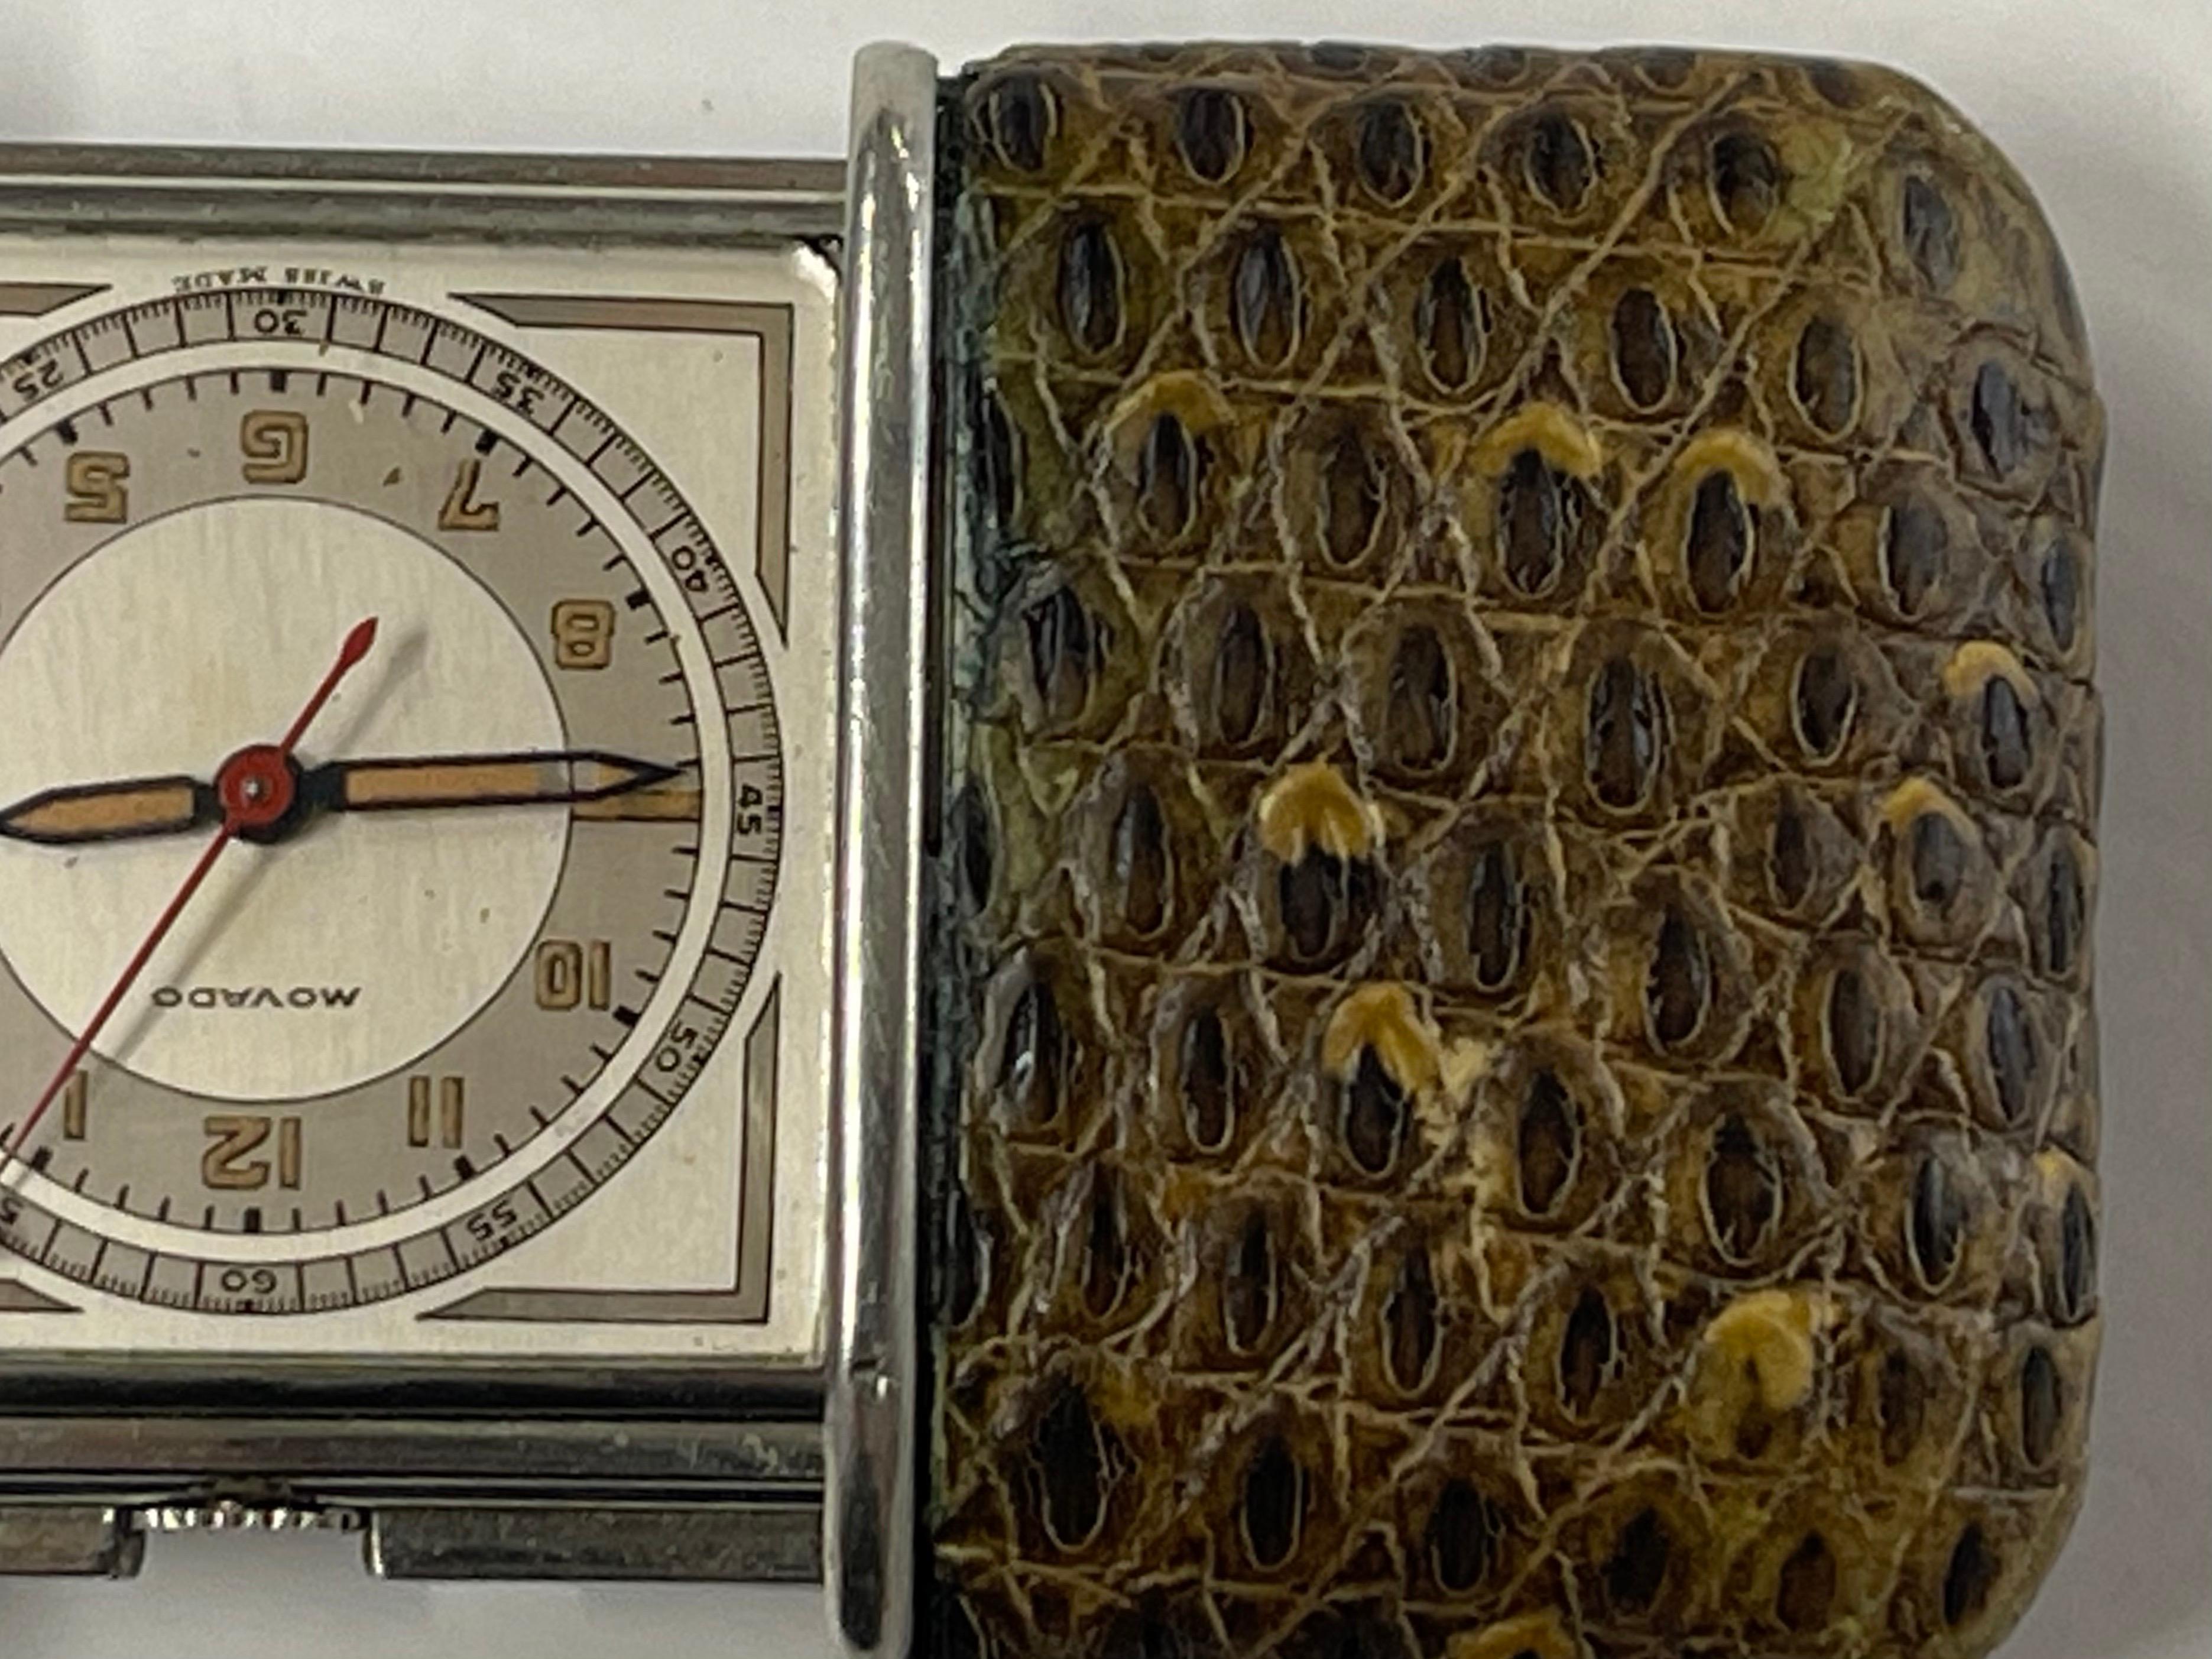 20th Century Vintage Movado Ermeto Travel Clock For Sale